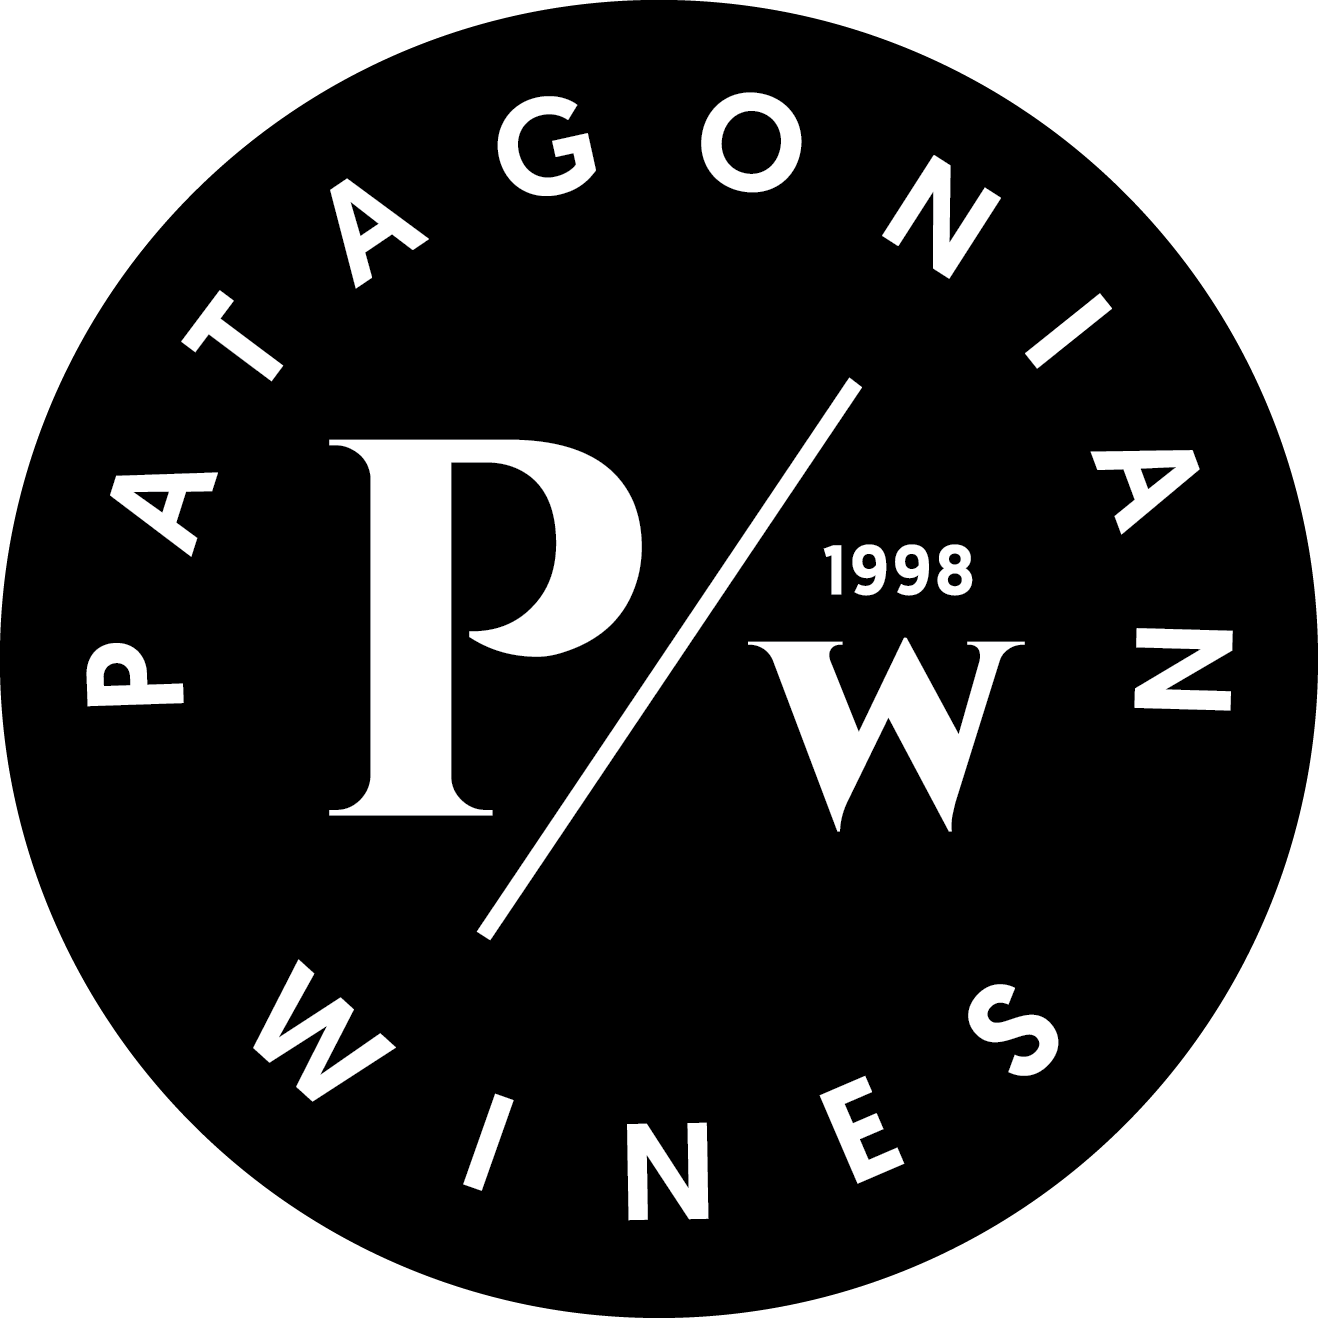 PATAGONIAN WINES